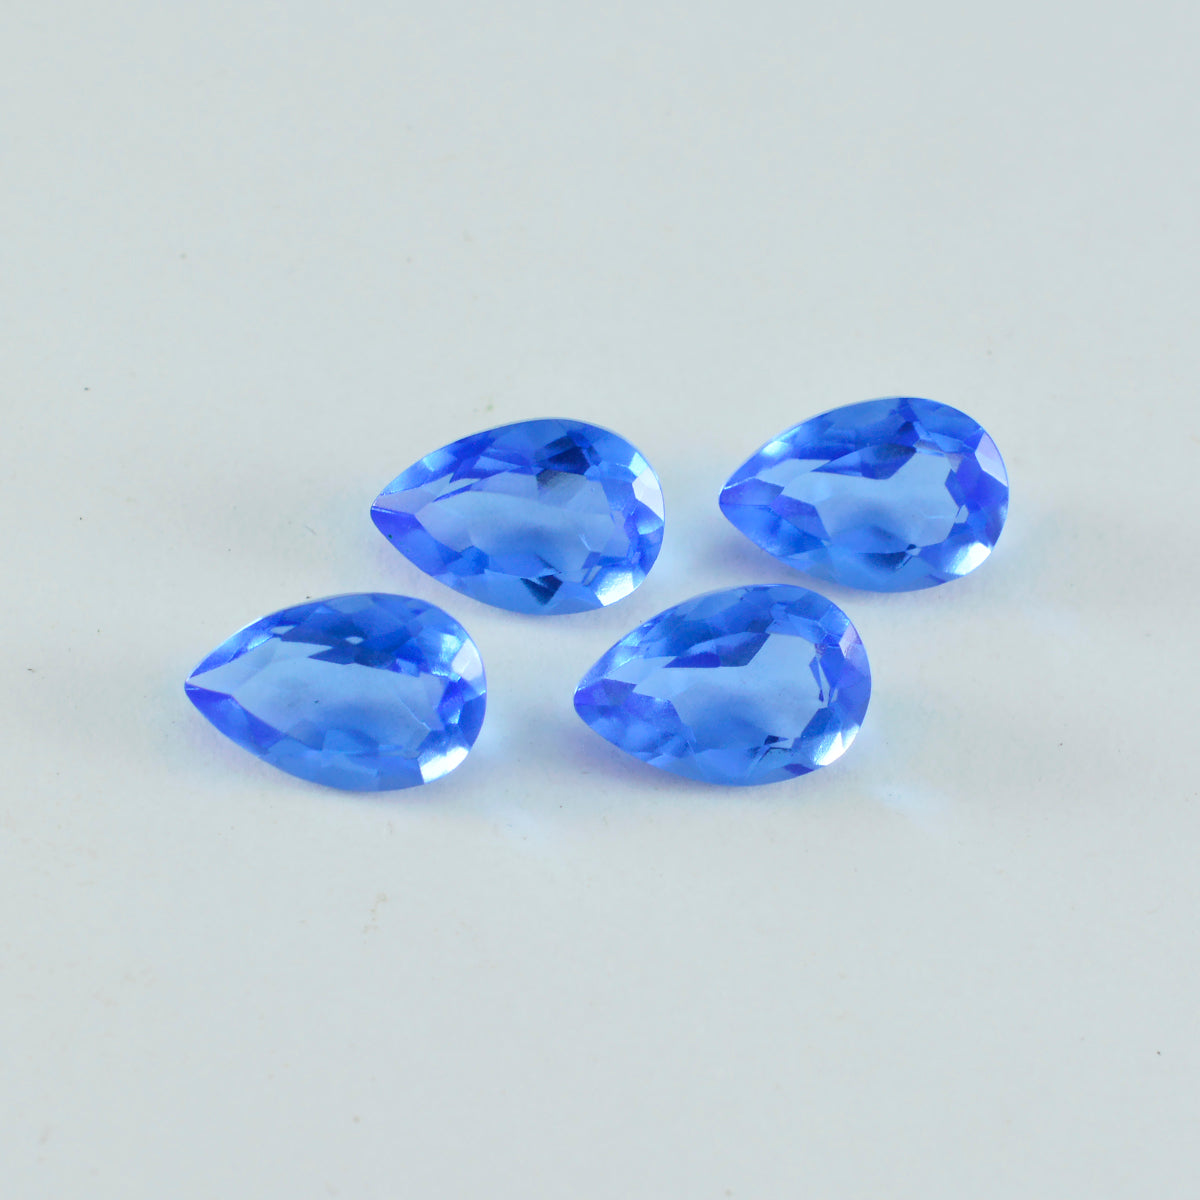 riyogems 1 st blå safir cz facetterad 8x12 mm päronform häpnadsväckande kvalitet lös pärla